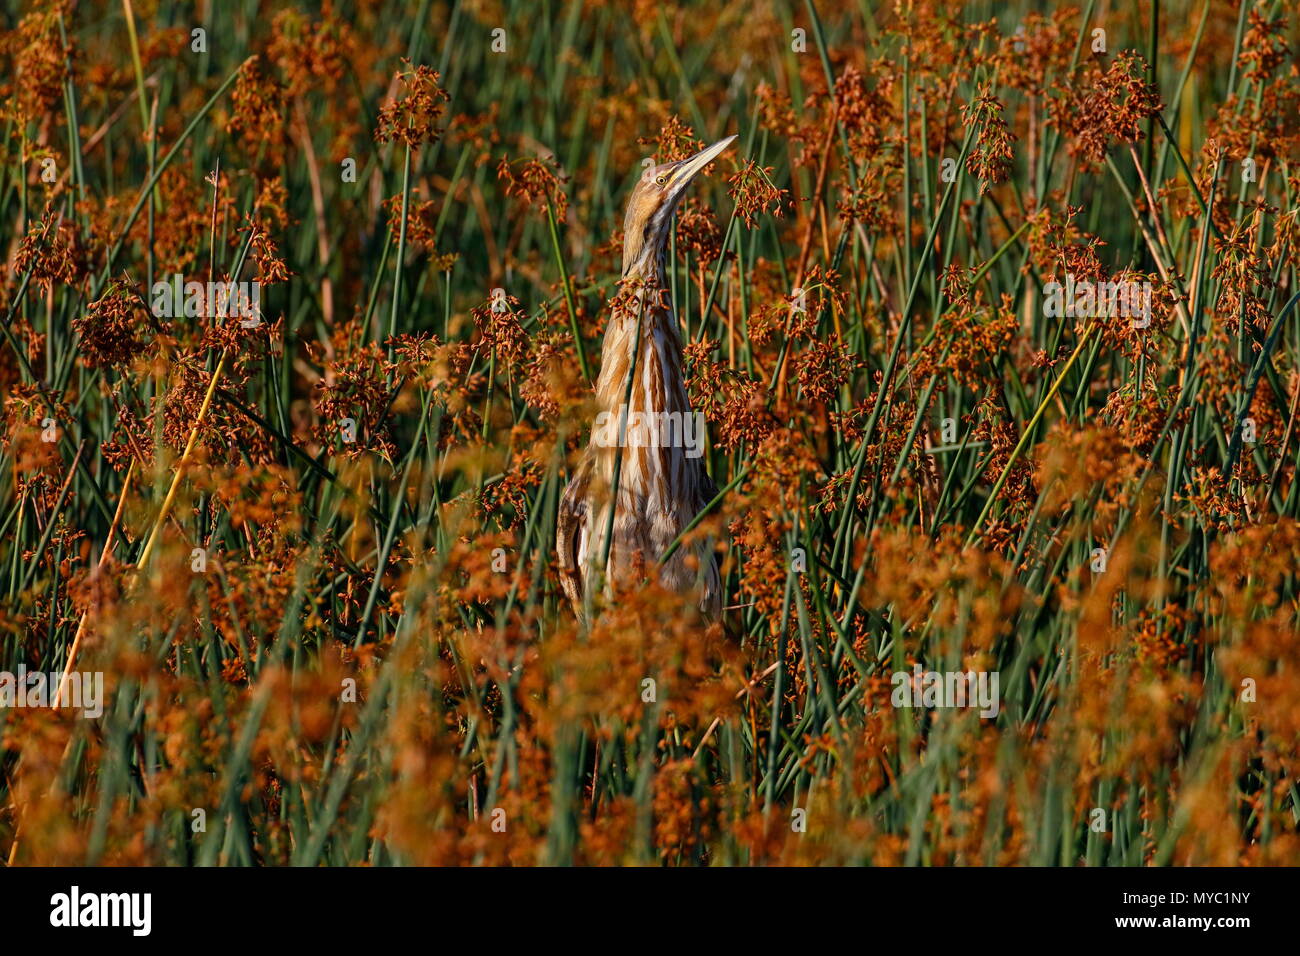 An American bittern, Botaurus lentiginosus, hidden among wetland reeds. Stock Photo